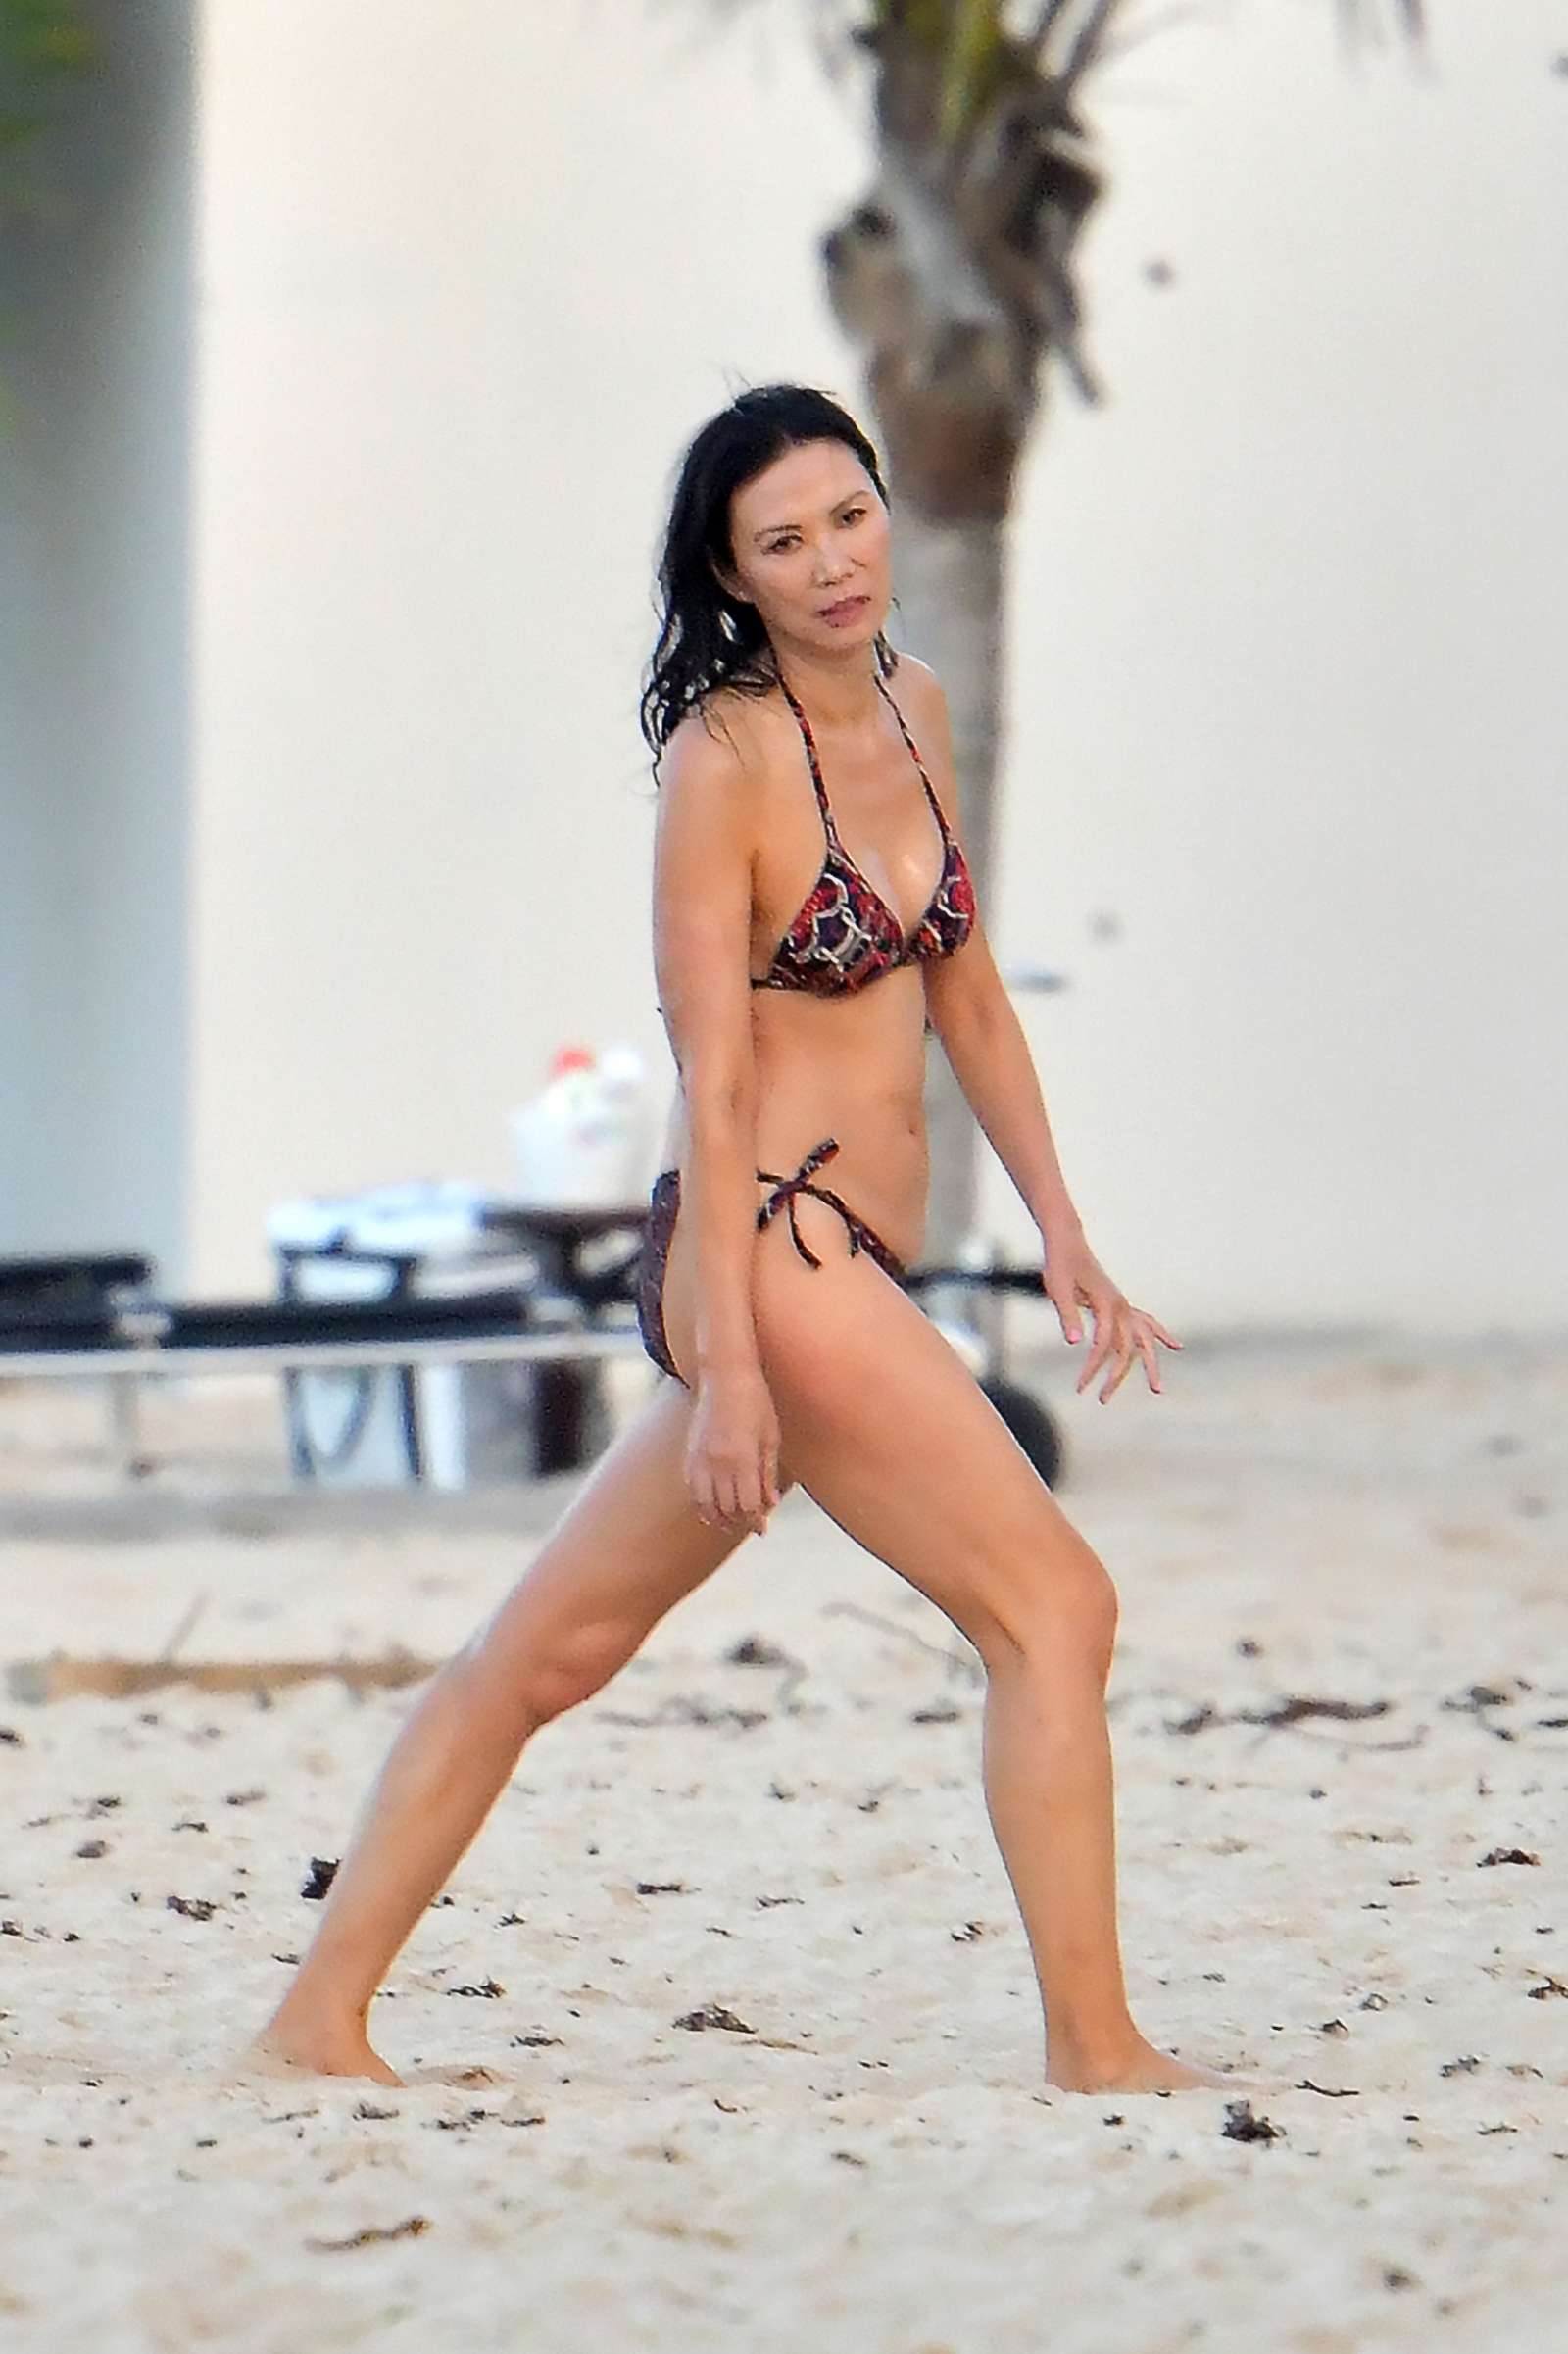 Wendi Deng Murdoch in Bikini on the beach in St. Barts. 